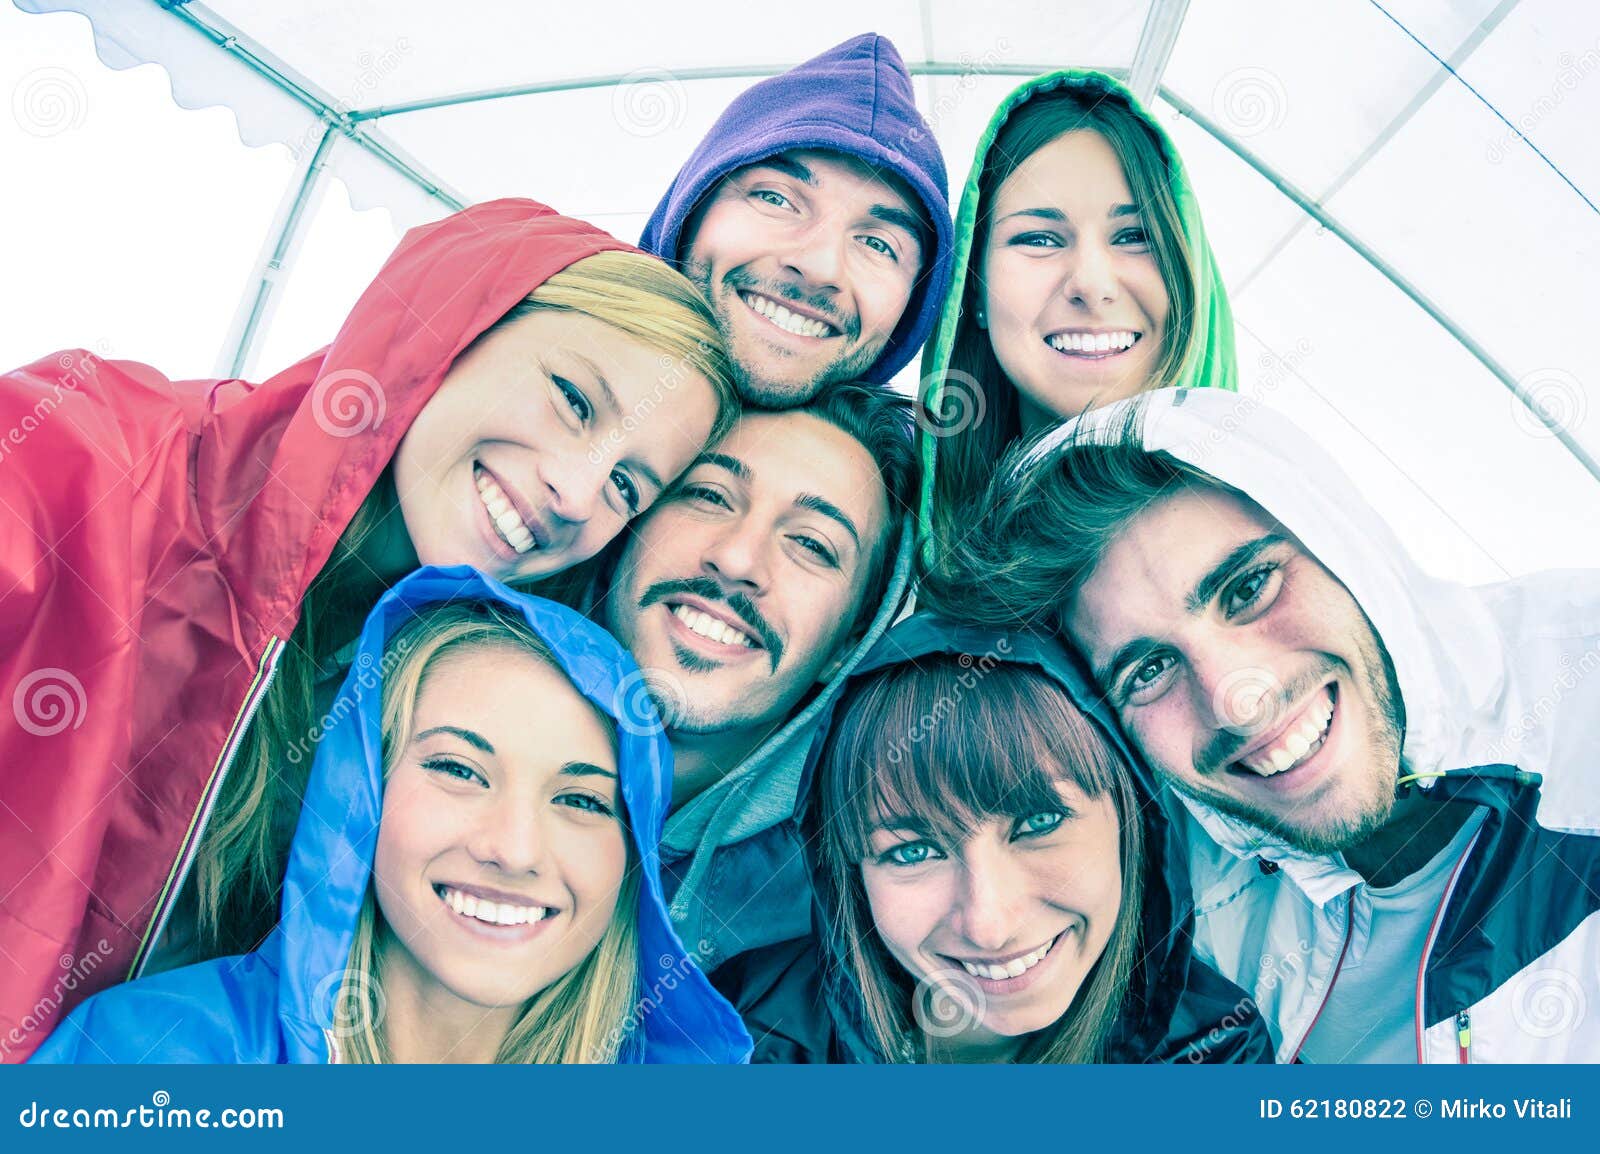 happy best friends taking selfie wearing hoodies outdoors